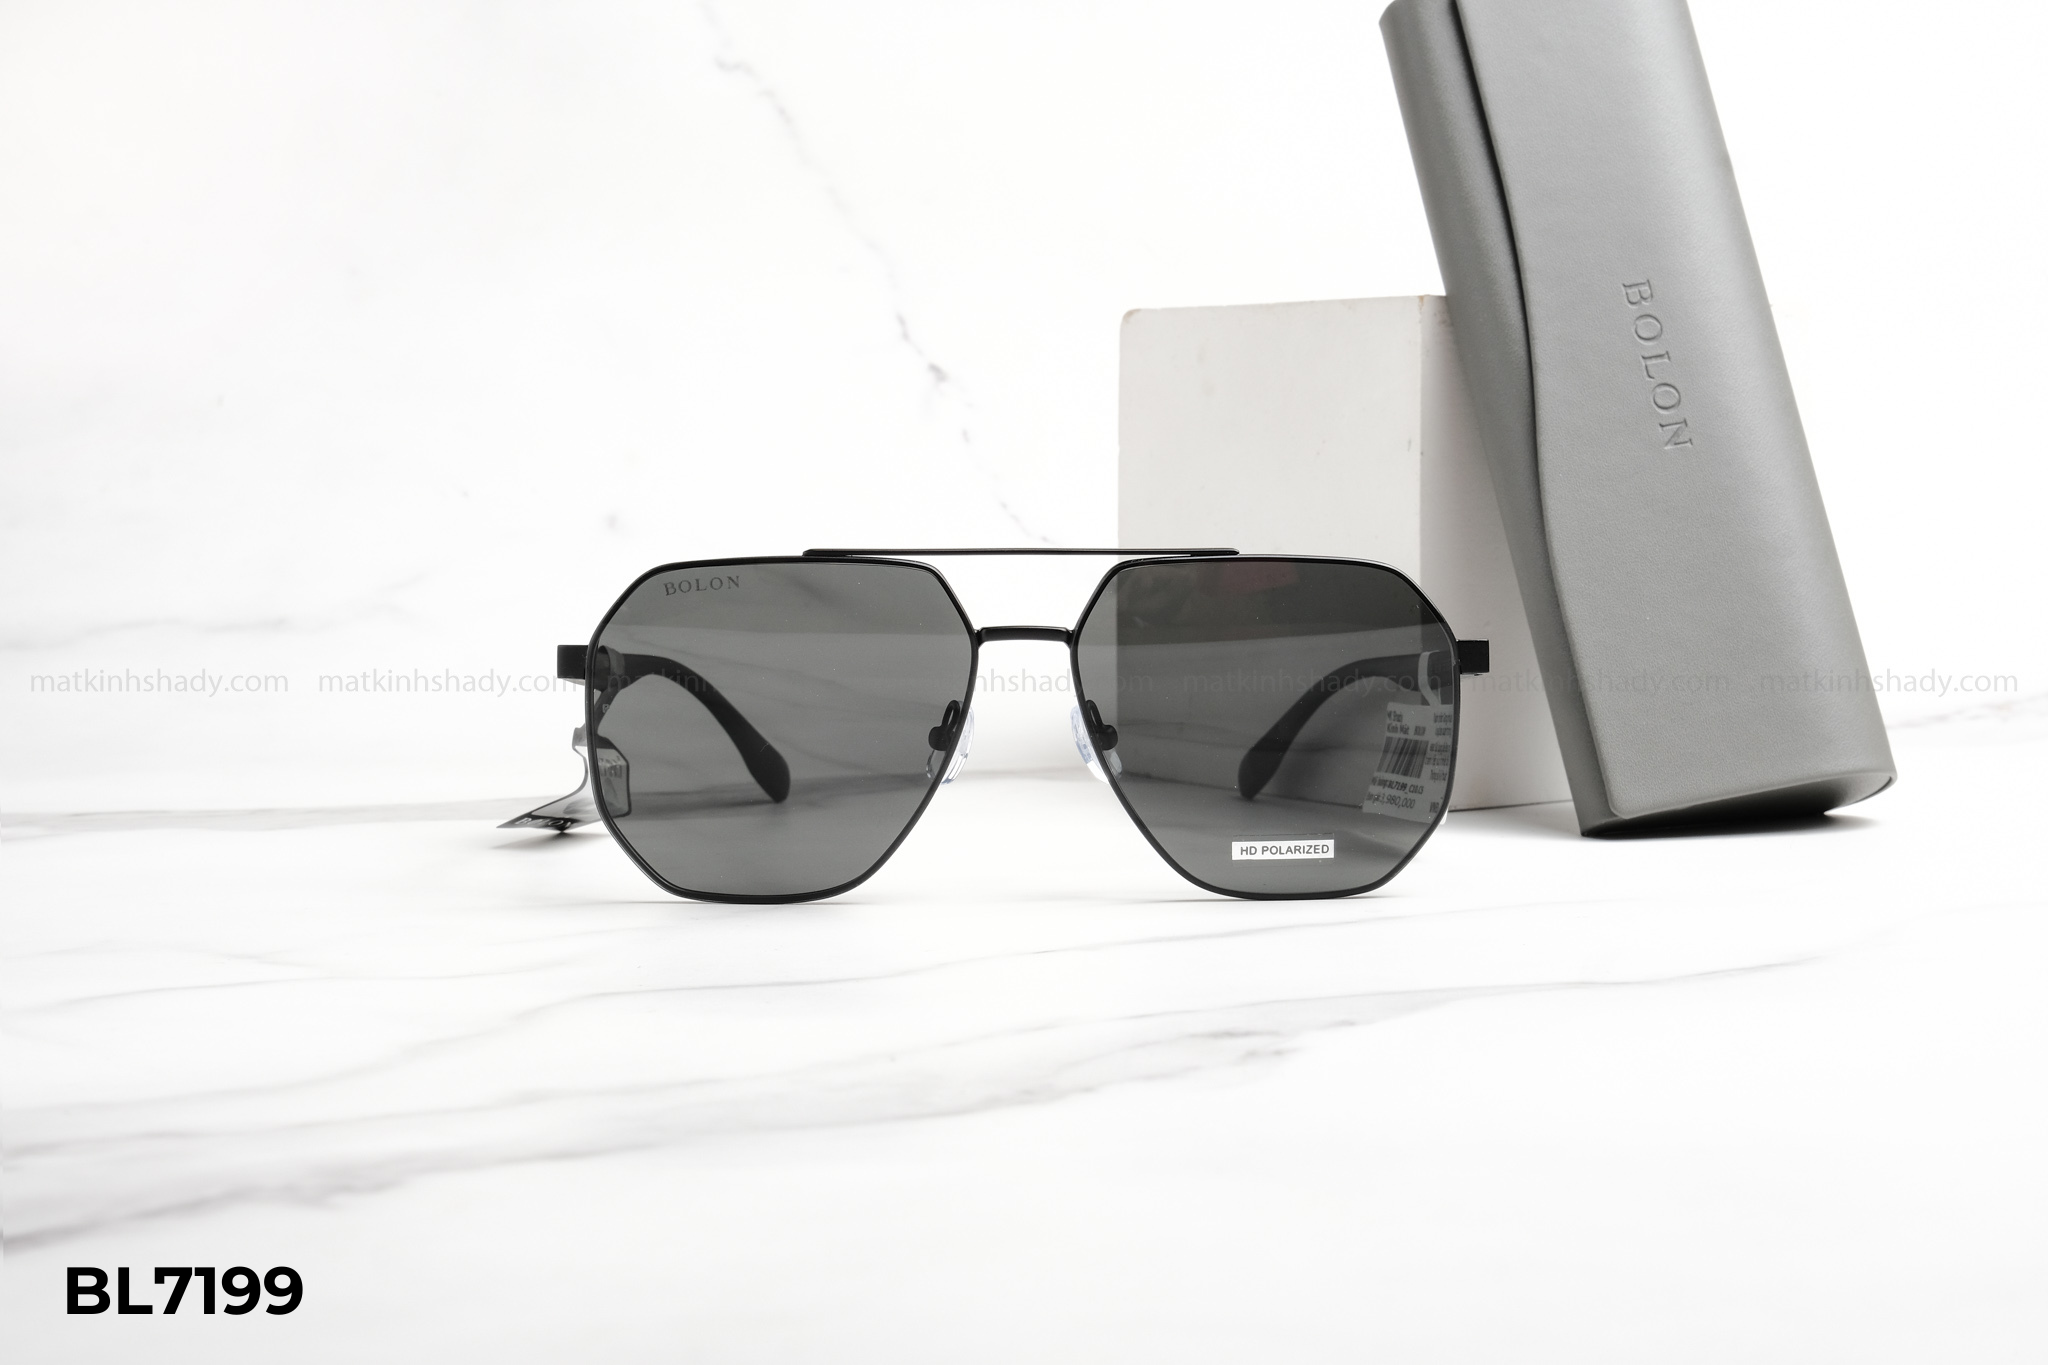  Bolon Eyewear - Sunglasses - BL7199 